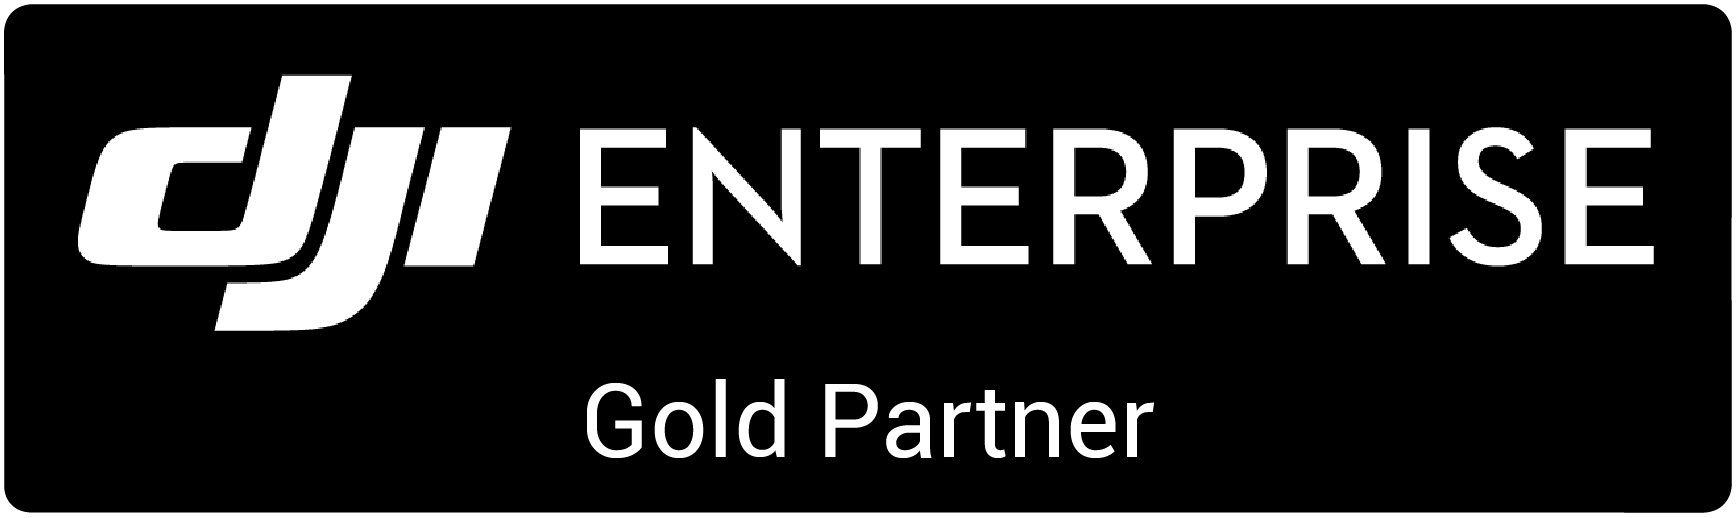 Qntrol ist DJI Enterprise Gold Partner